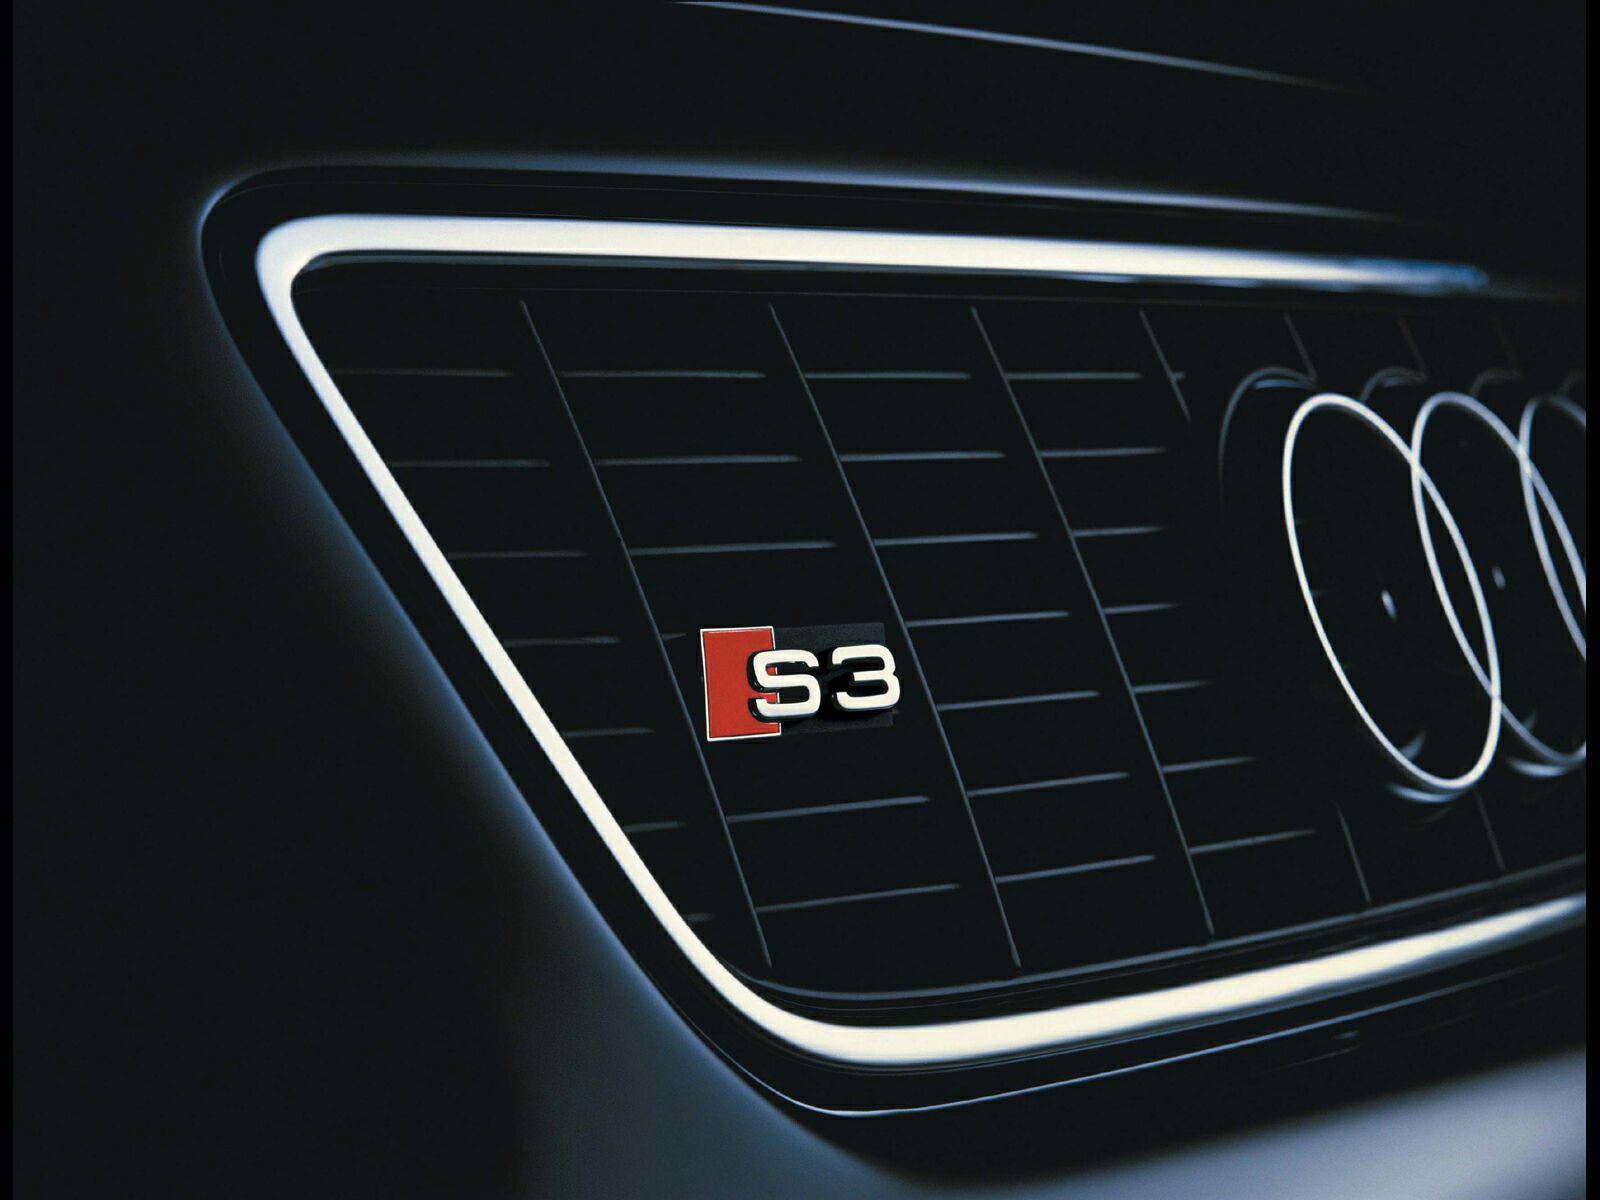 Audi A3 Interior Image